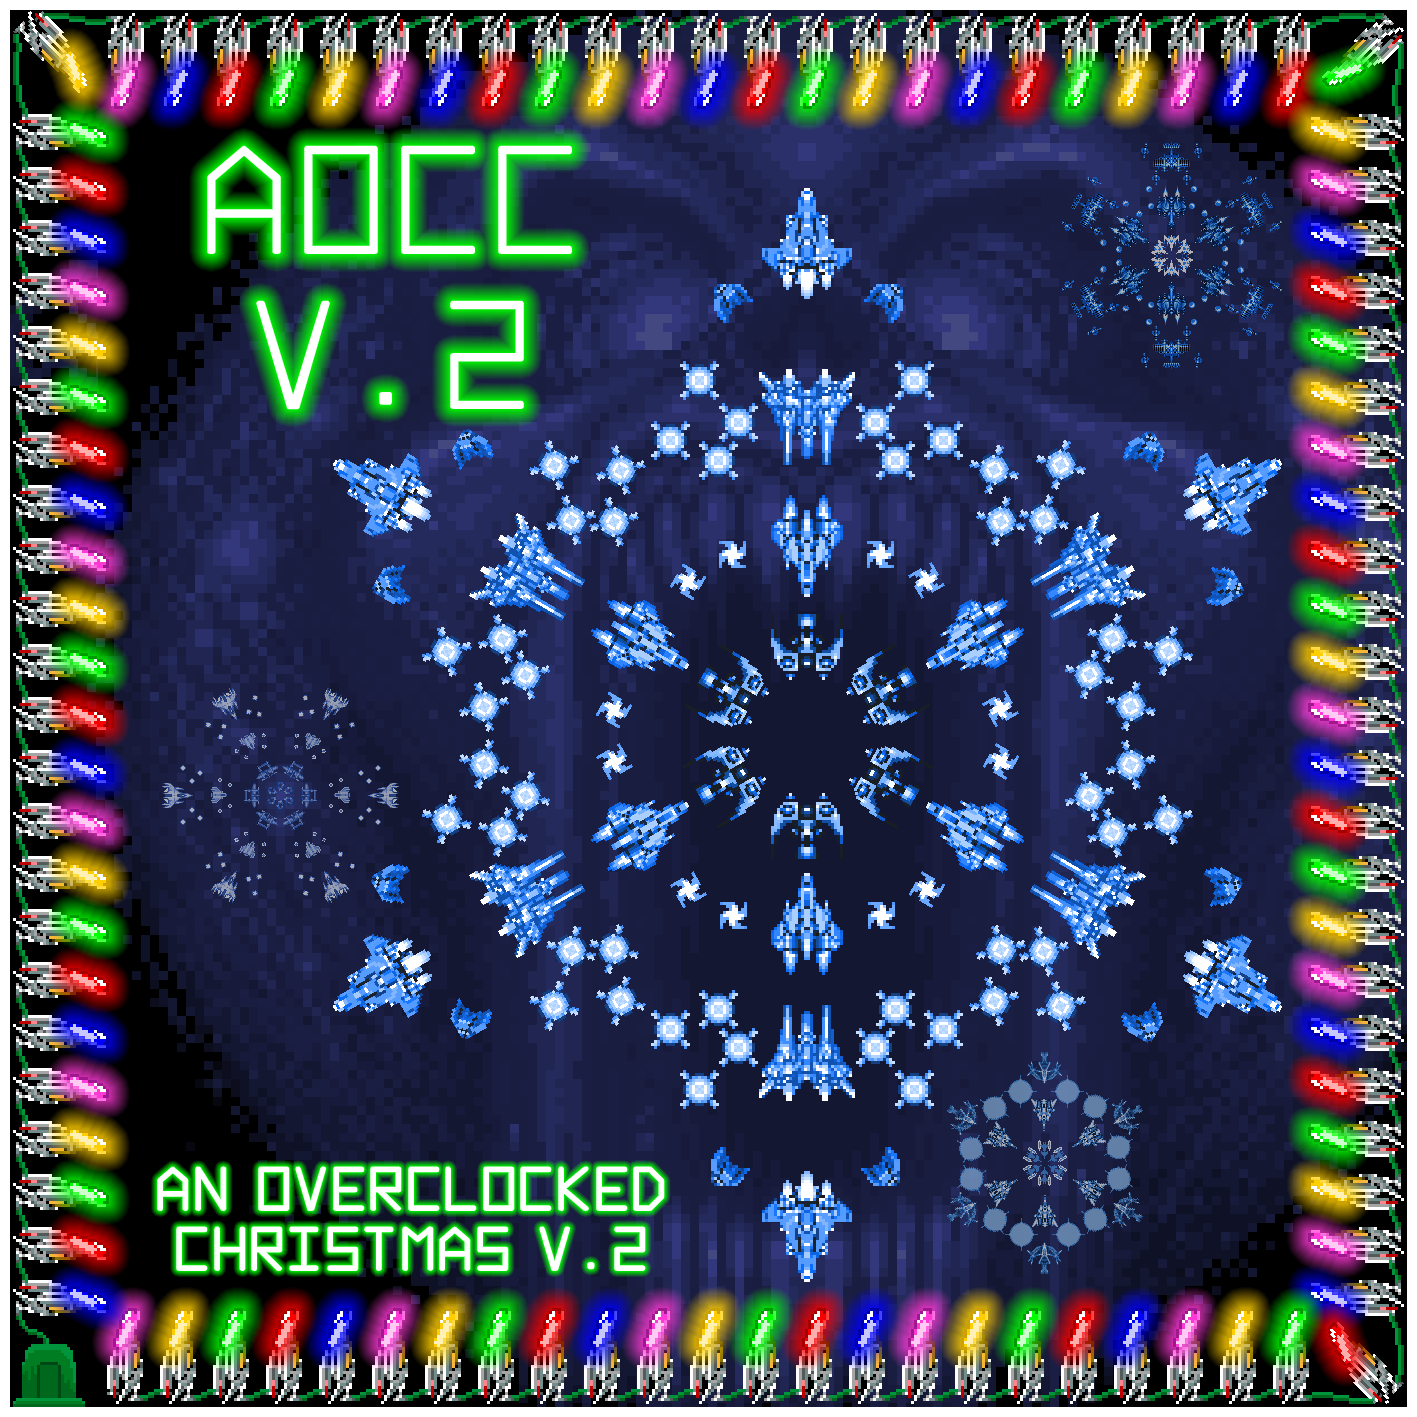 An OverClocked Christmas v.2 cover